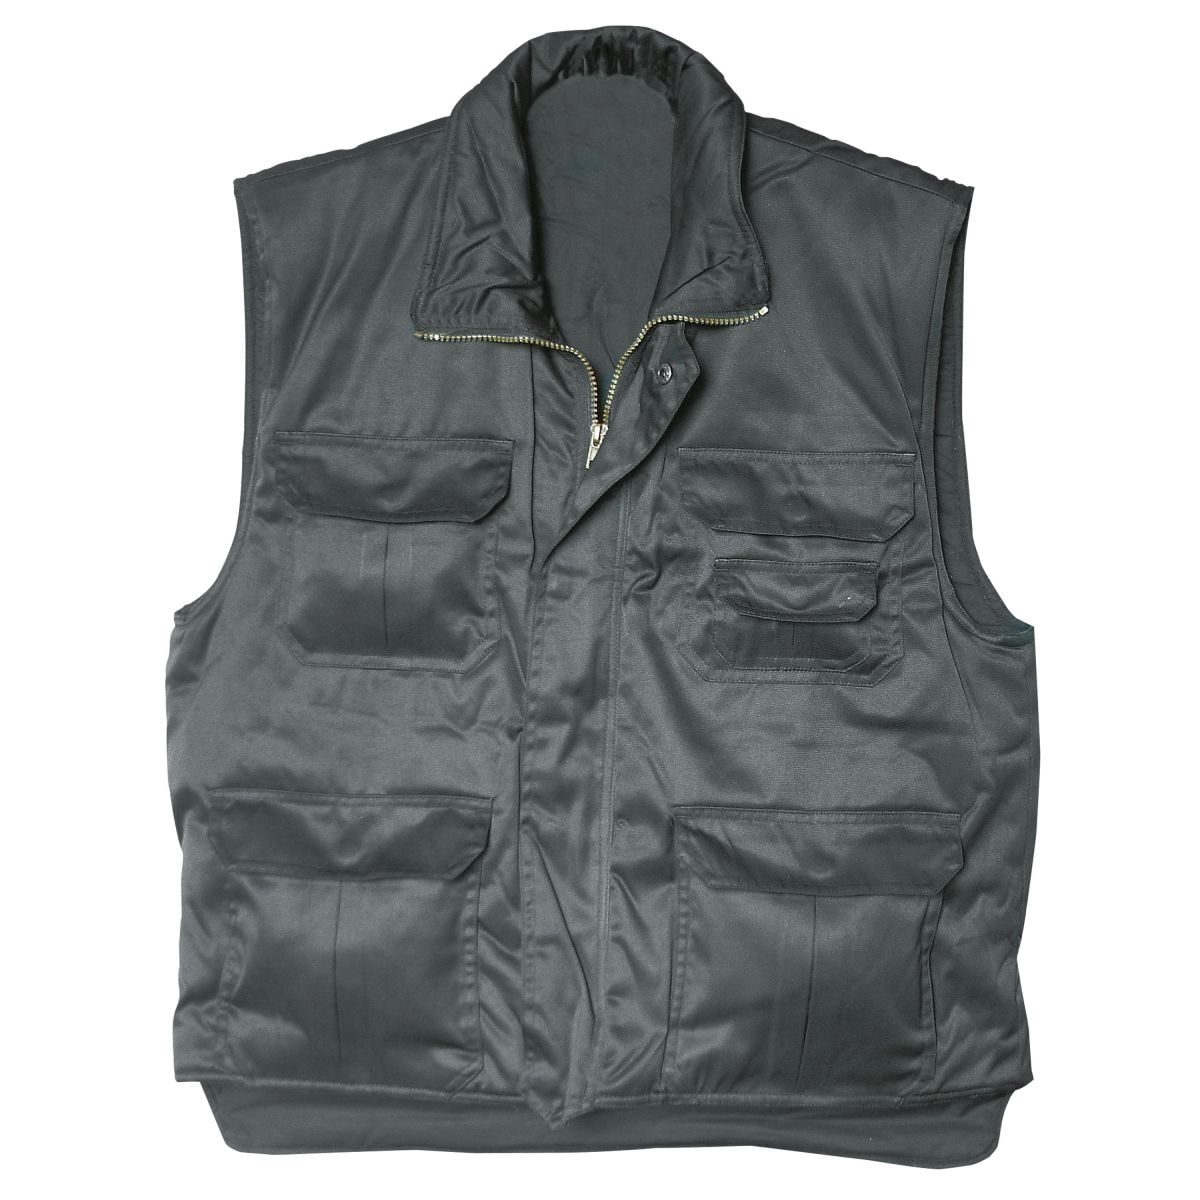 Purchase the Ranger Vest black by ASMC